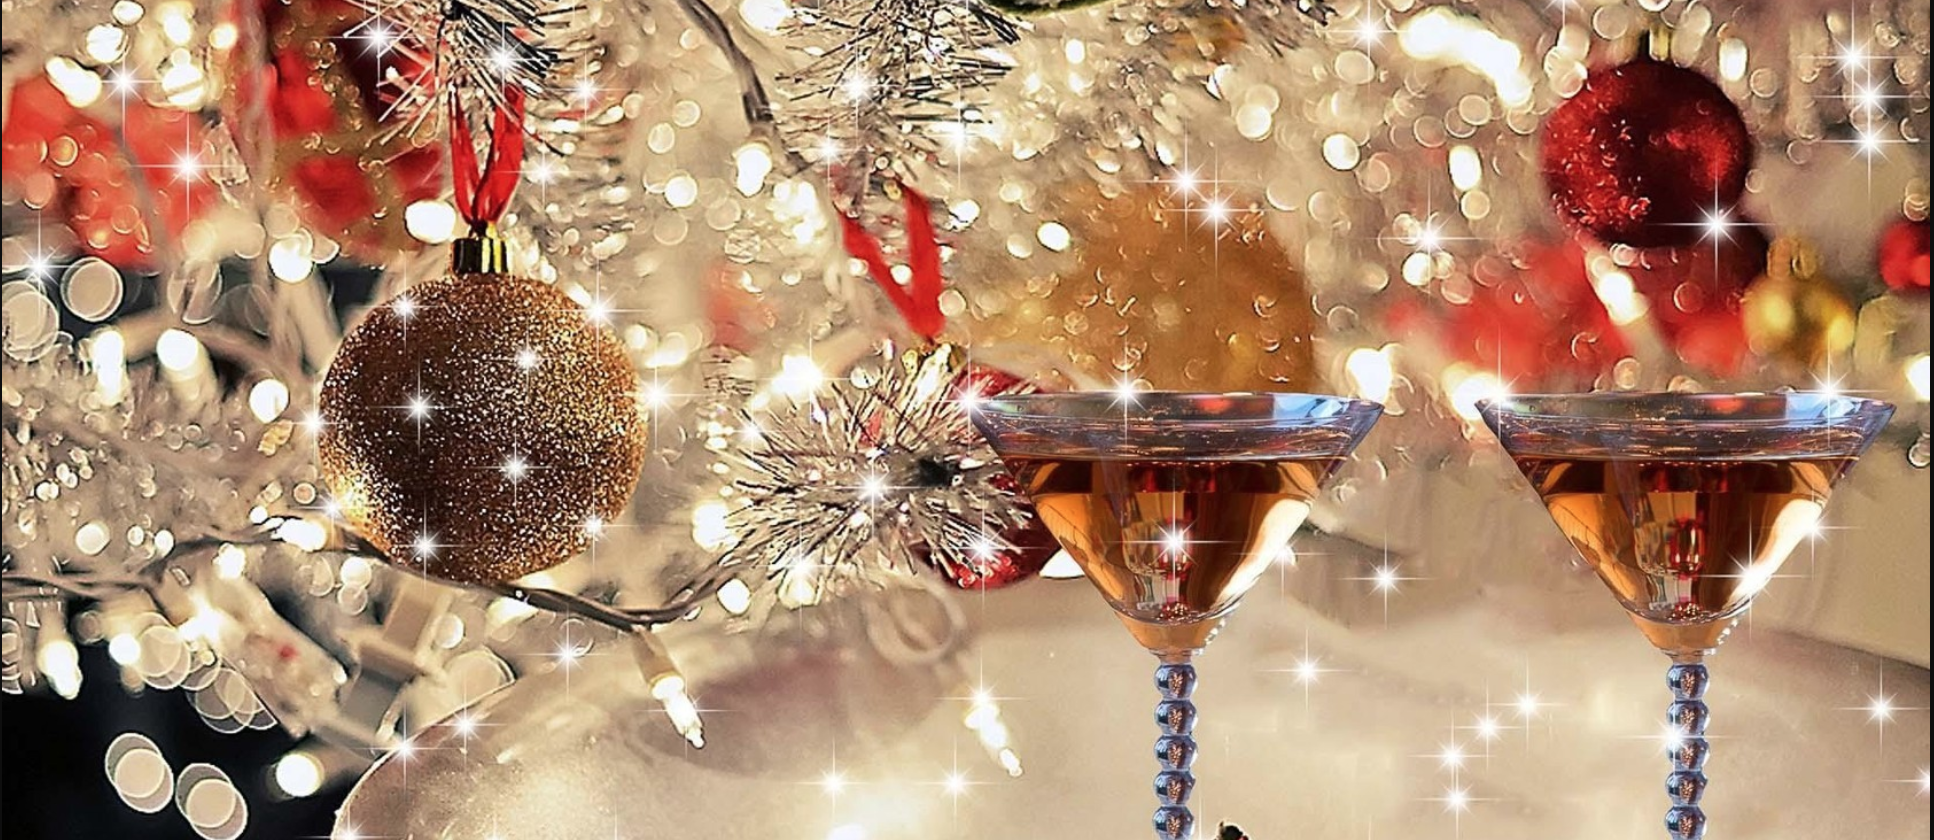 Christmas martinis ornaments tree